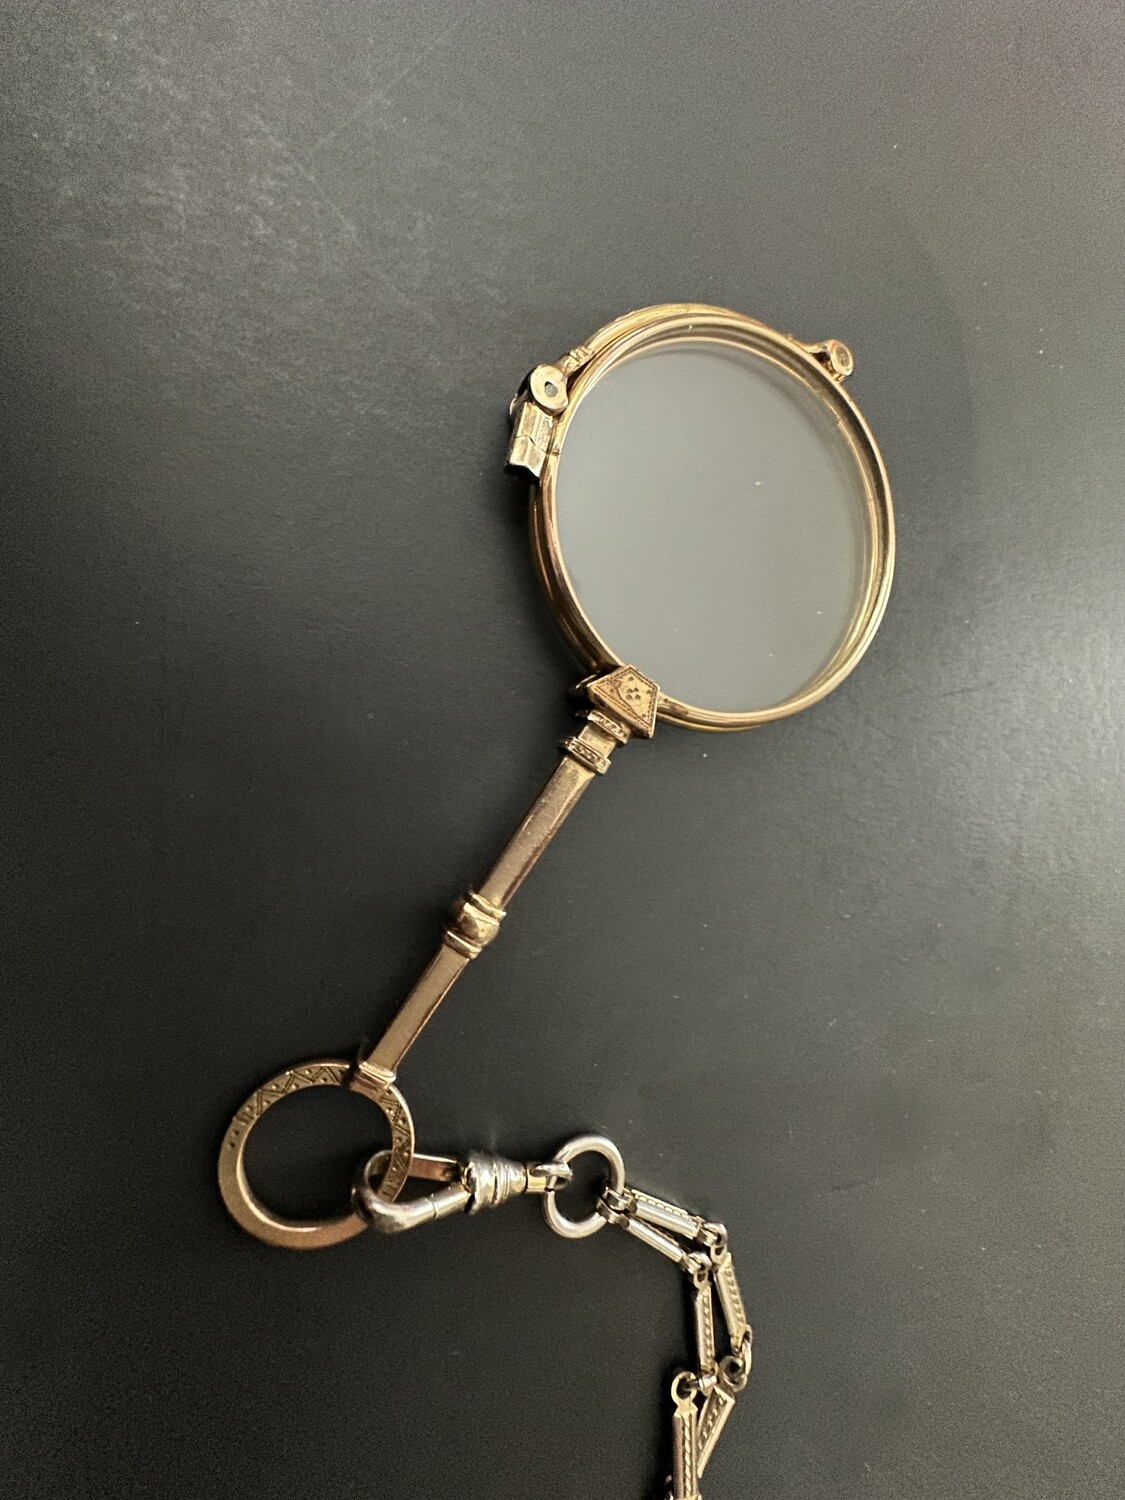 Antique French Lorgnette Steampunk Eyeglasses Magnifier Necklace